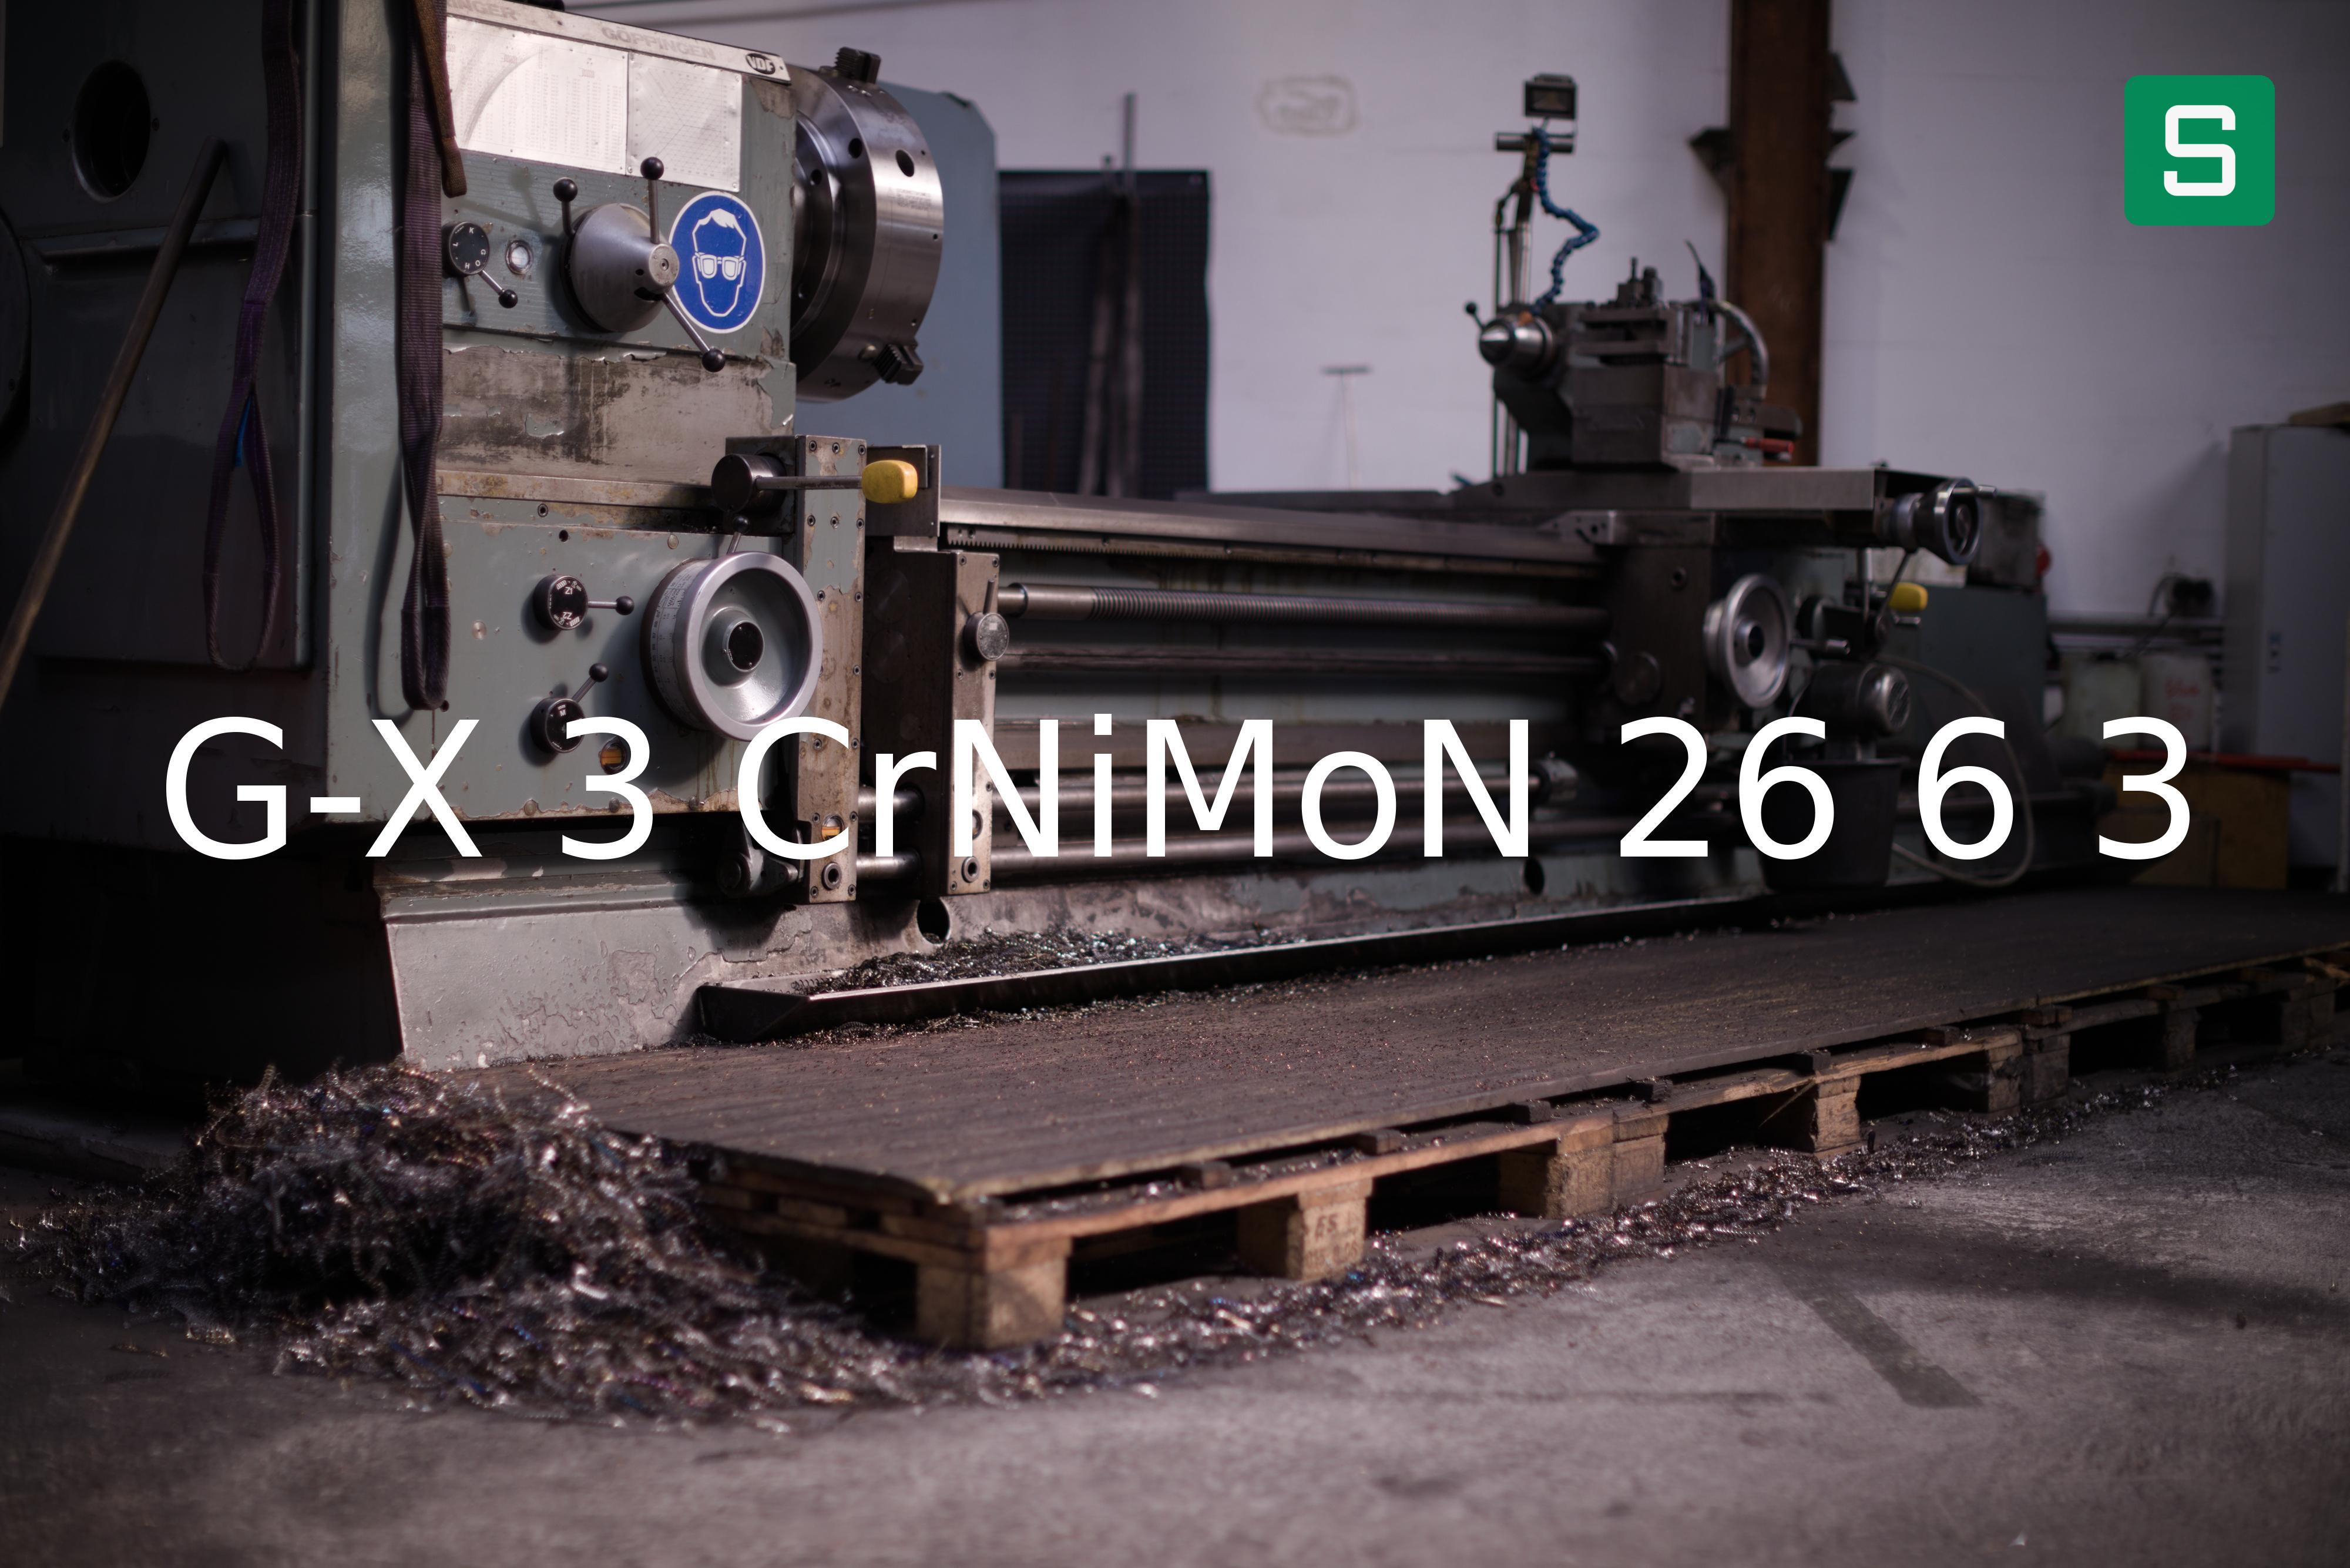 Steel Material: G-X 3 CrNiMoN 26 6 3